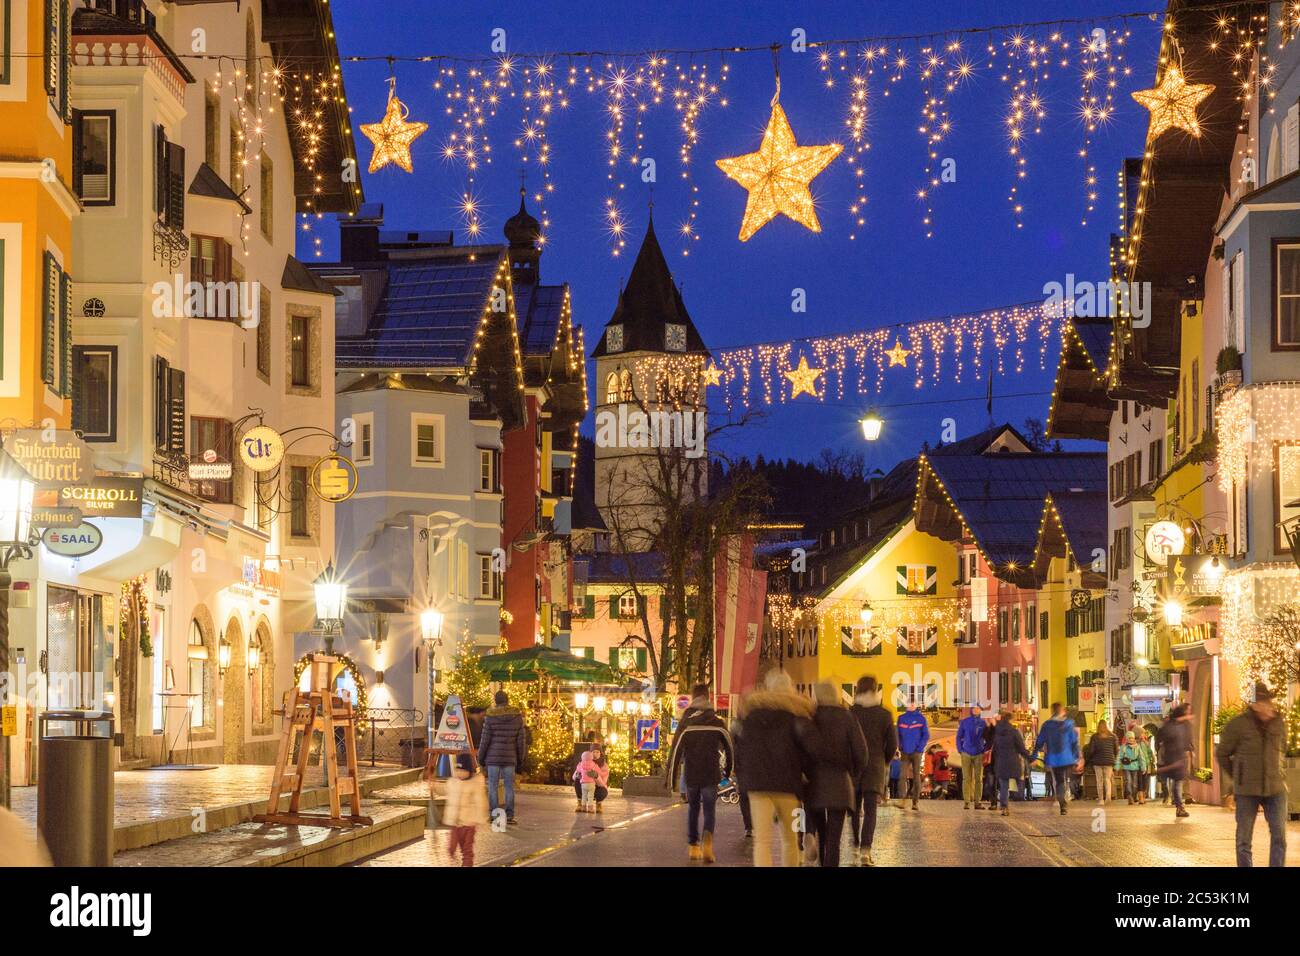 Kitzbuhel austria christmas hi-res stock photography and images - Alamy